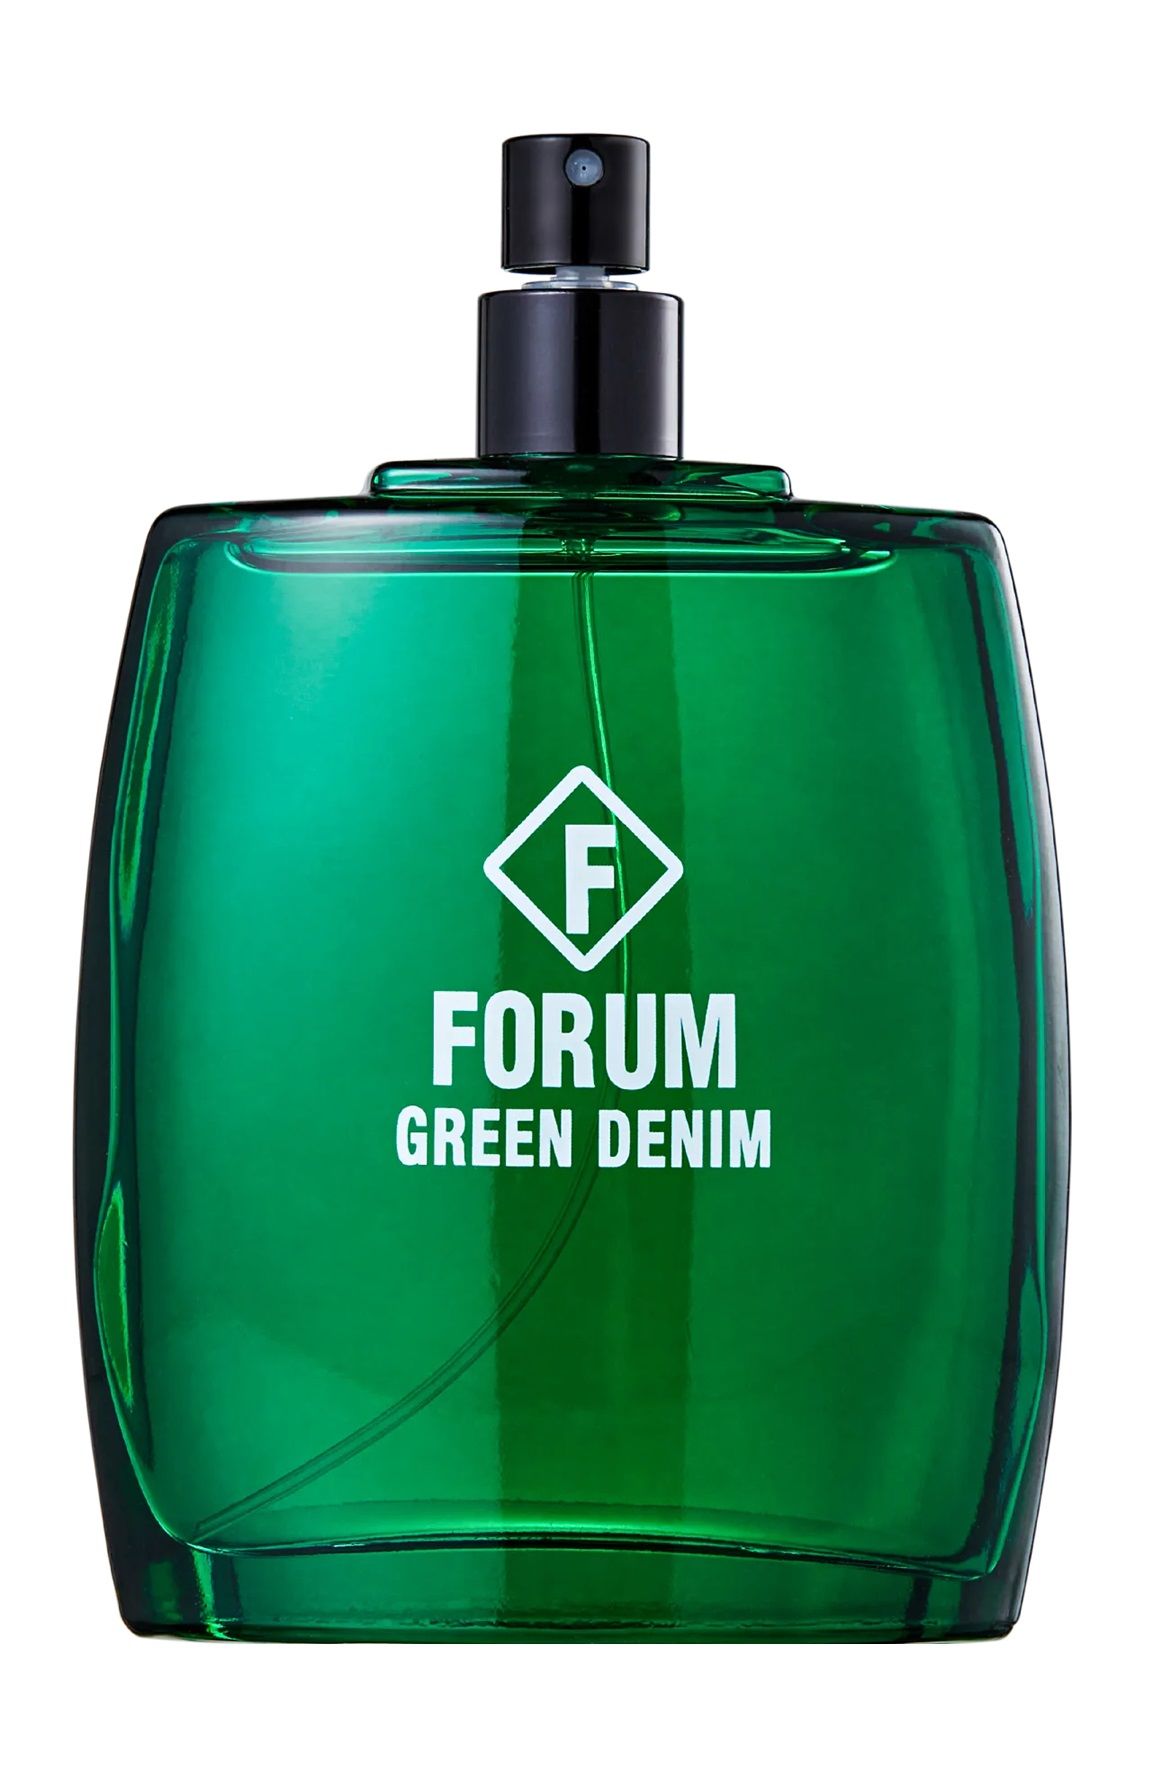 Forum Green Denim Masculino Eau de Cologne 100ml - imagem 1